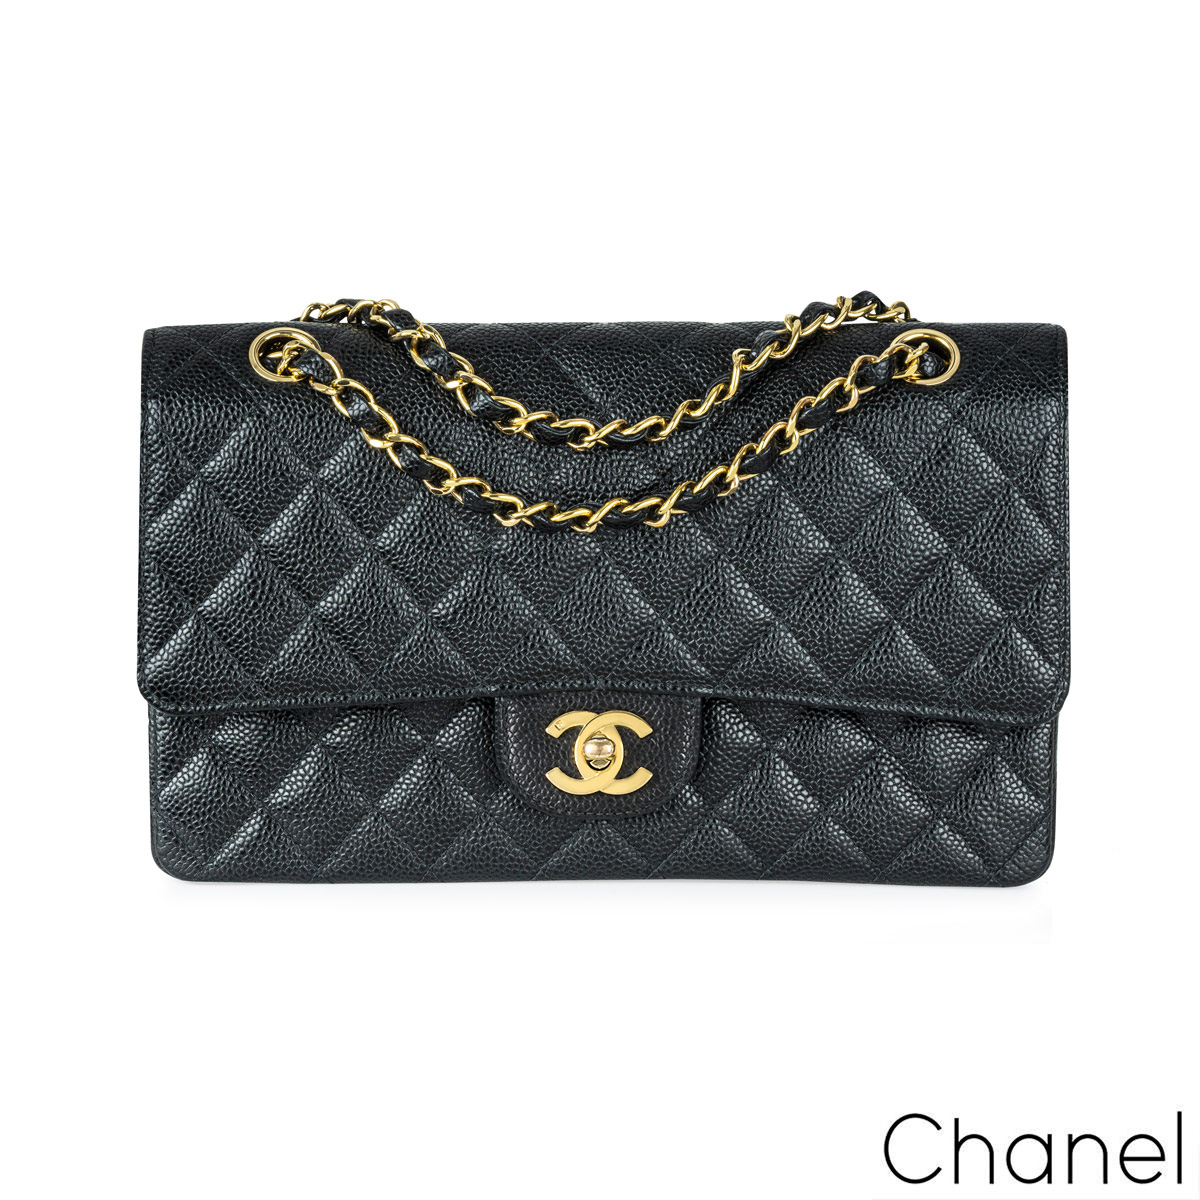 Chanel handbags are pure clascis Hanadi Merchant tells us why